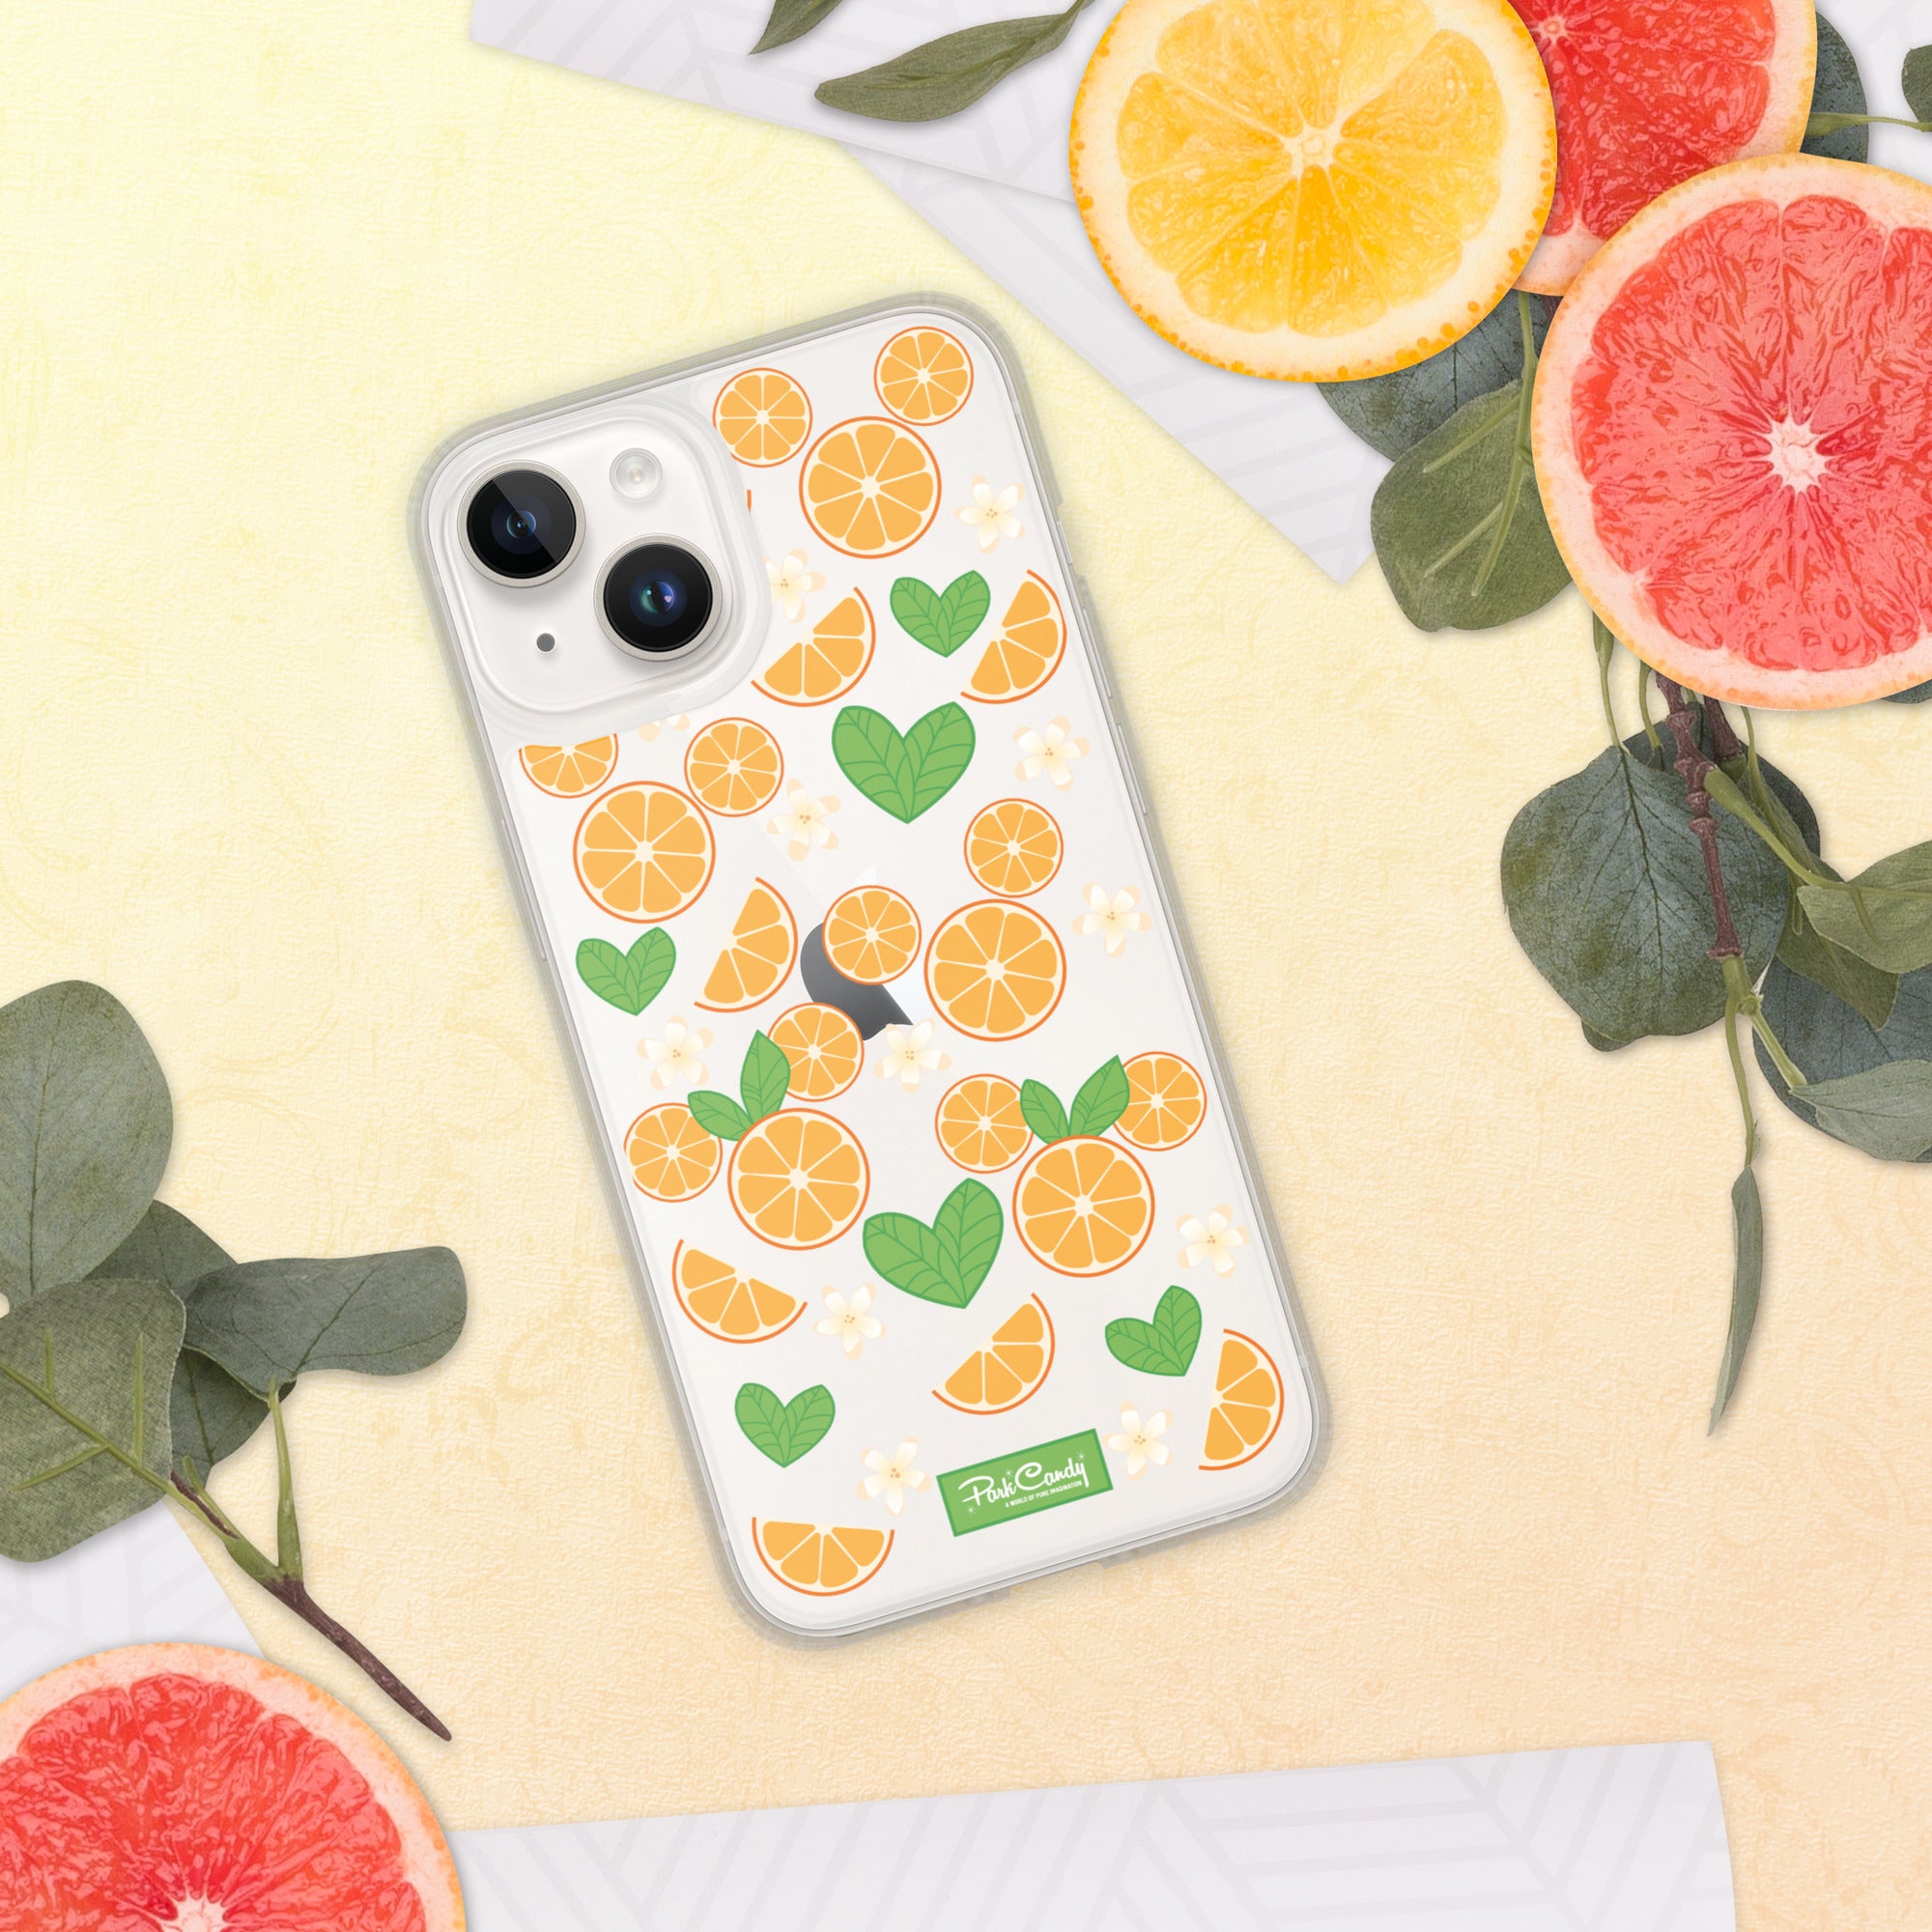 Orange Groves iPhone Case - Park Candy